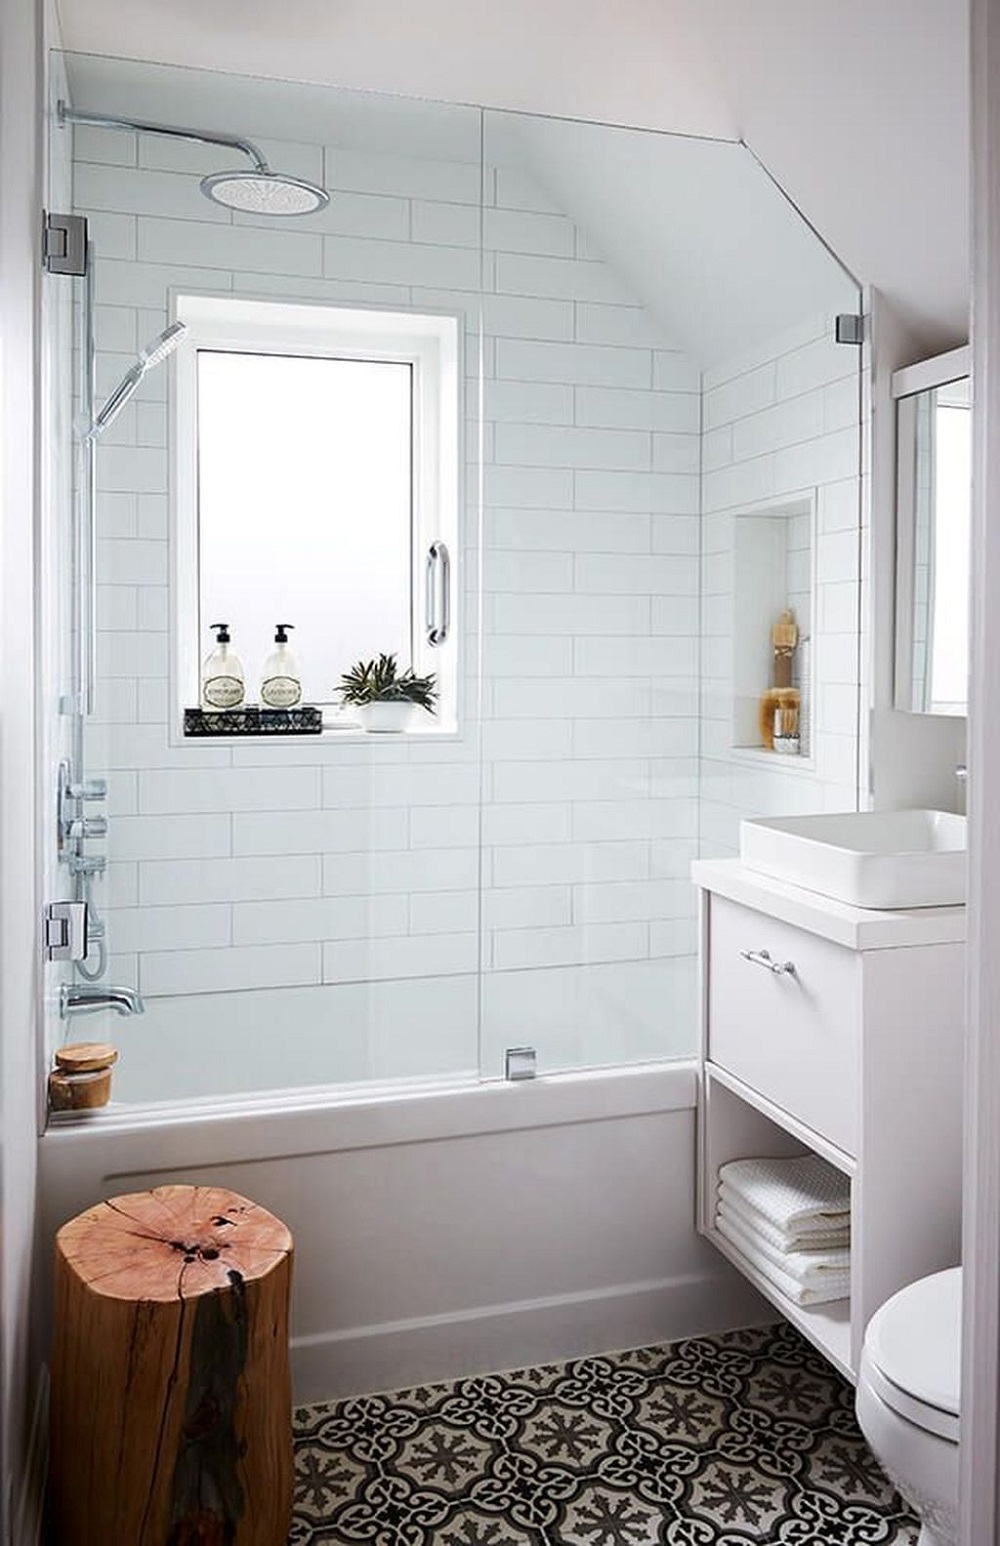 van2-2 Neat corner bathroom vanity ideas you will find useful